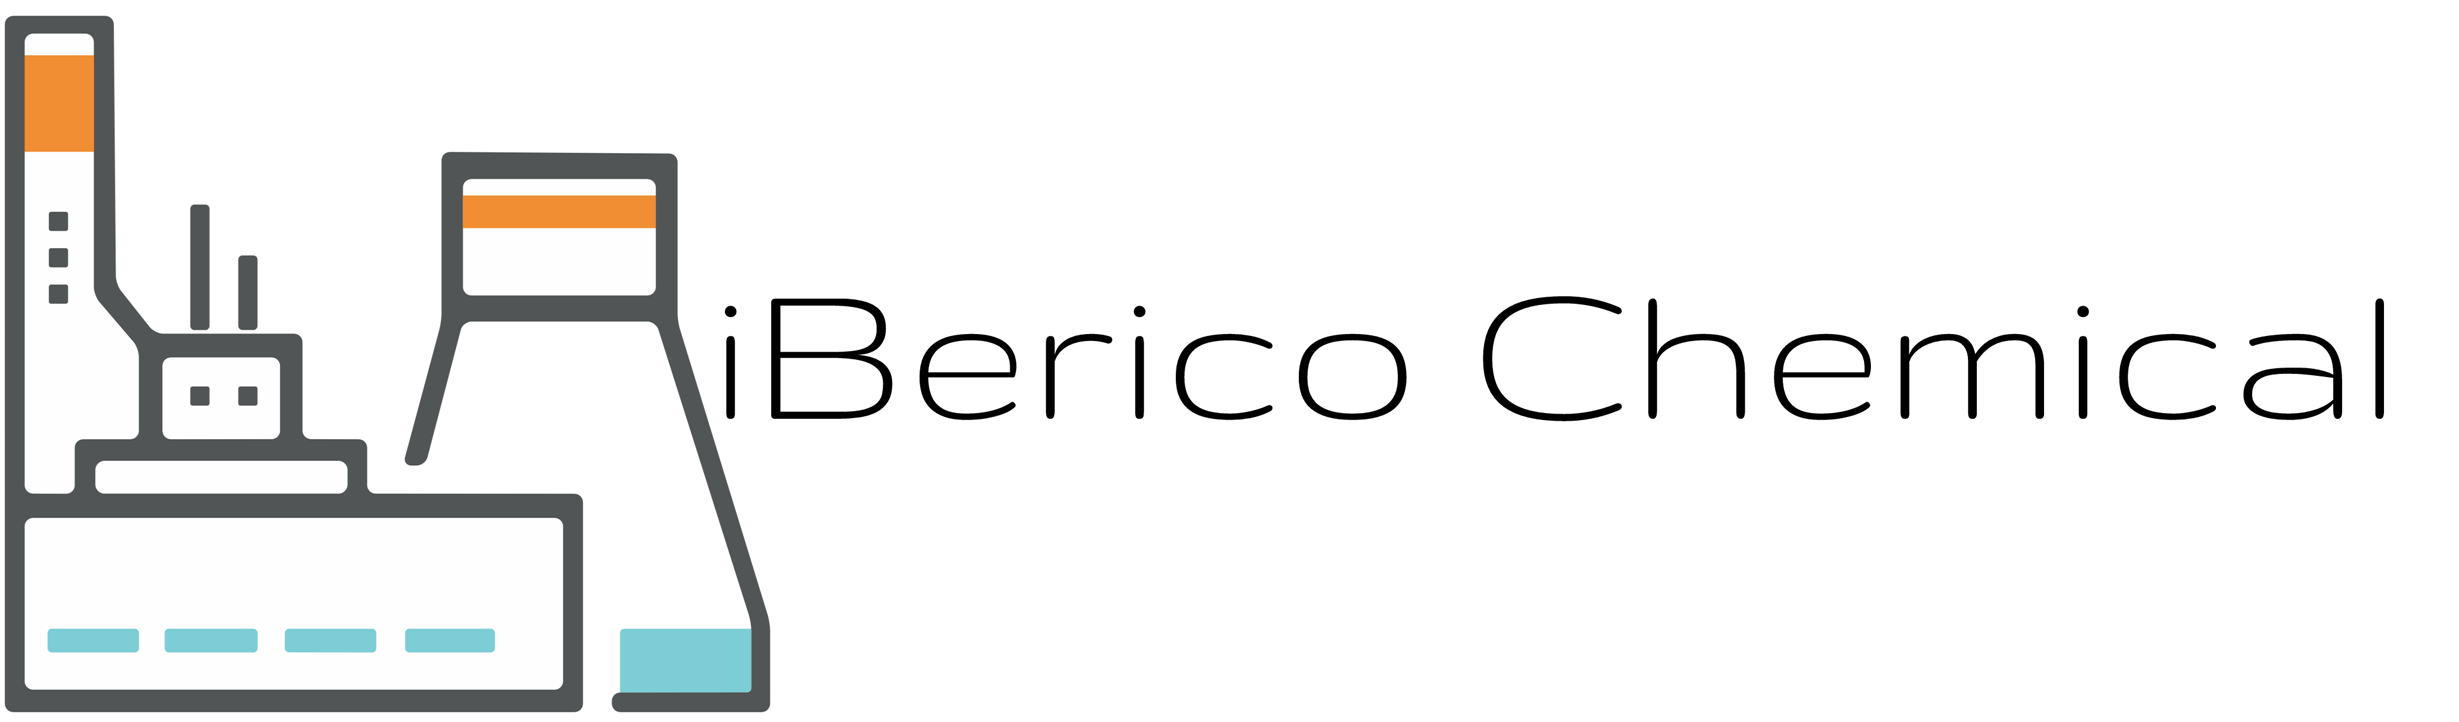 iBerico Chemical